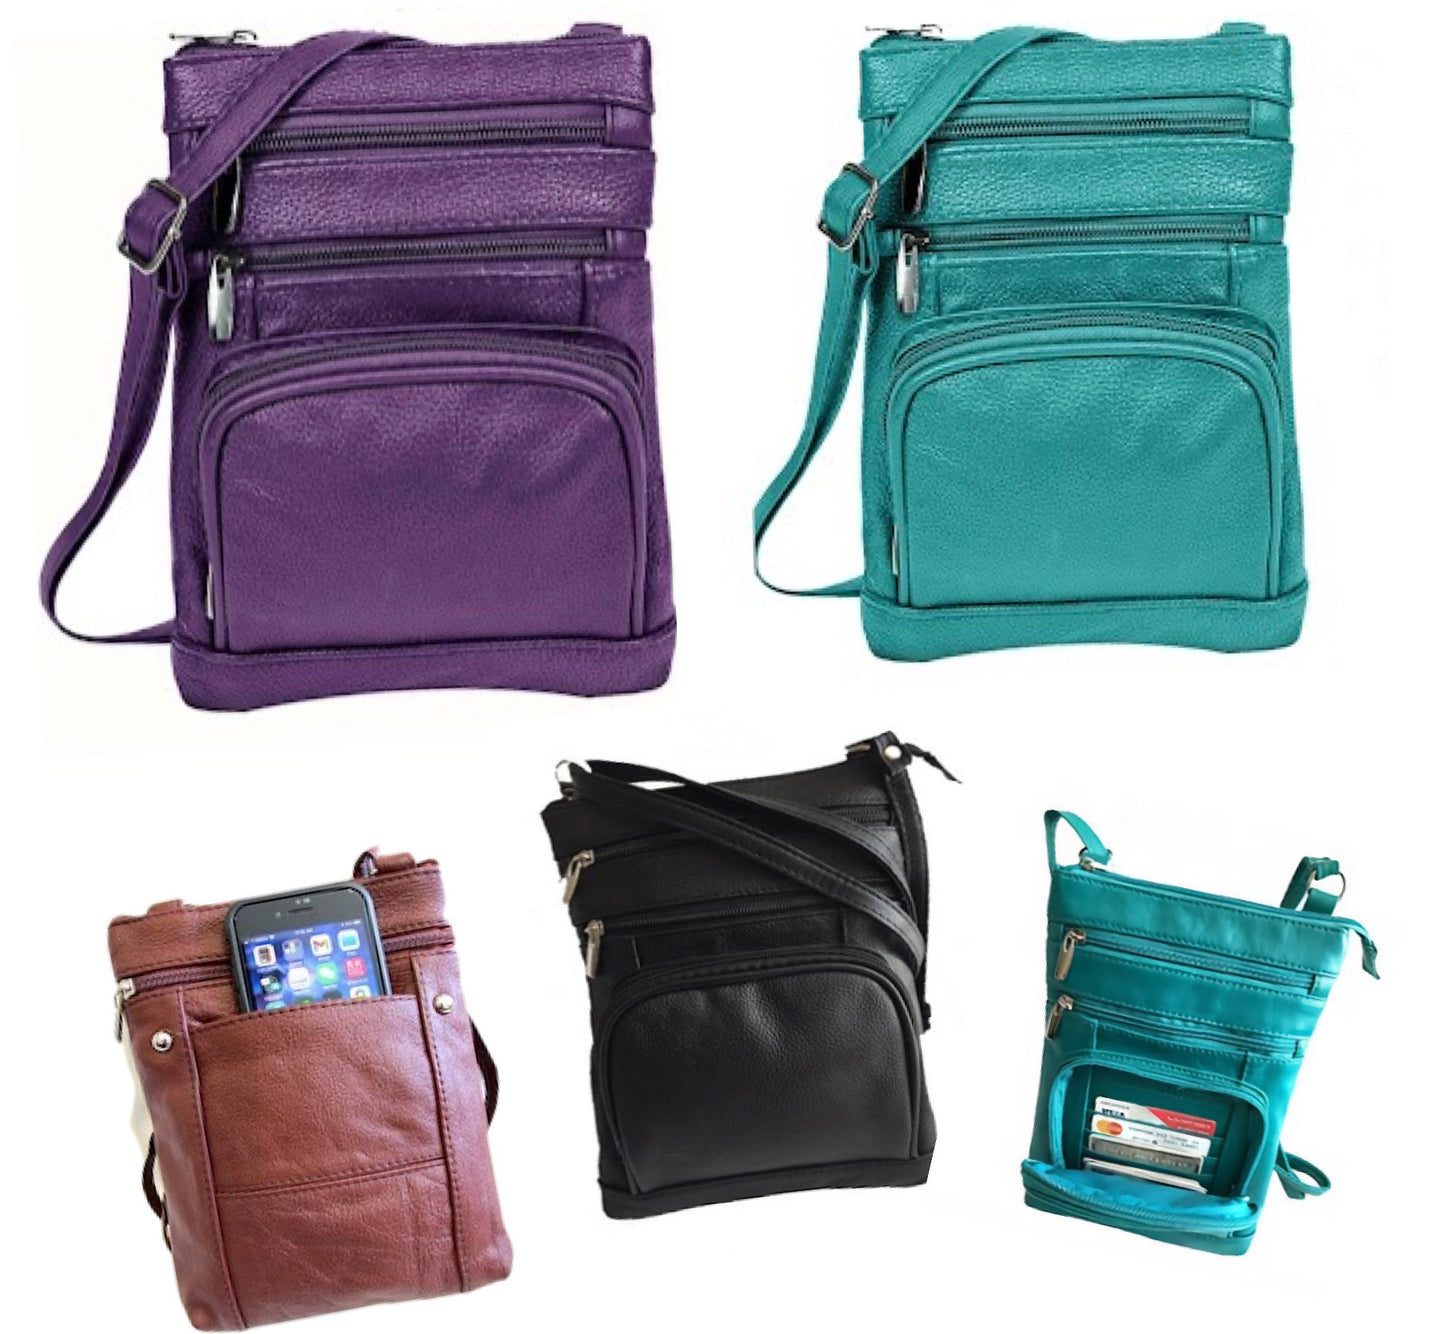 Leather purses in pretty colors small